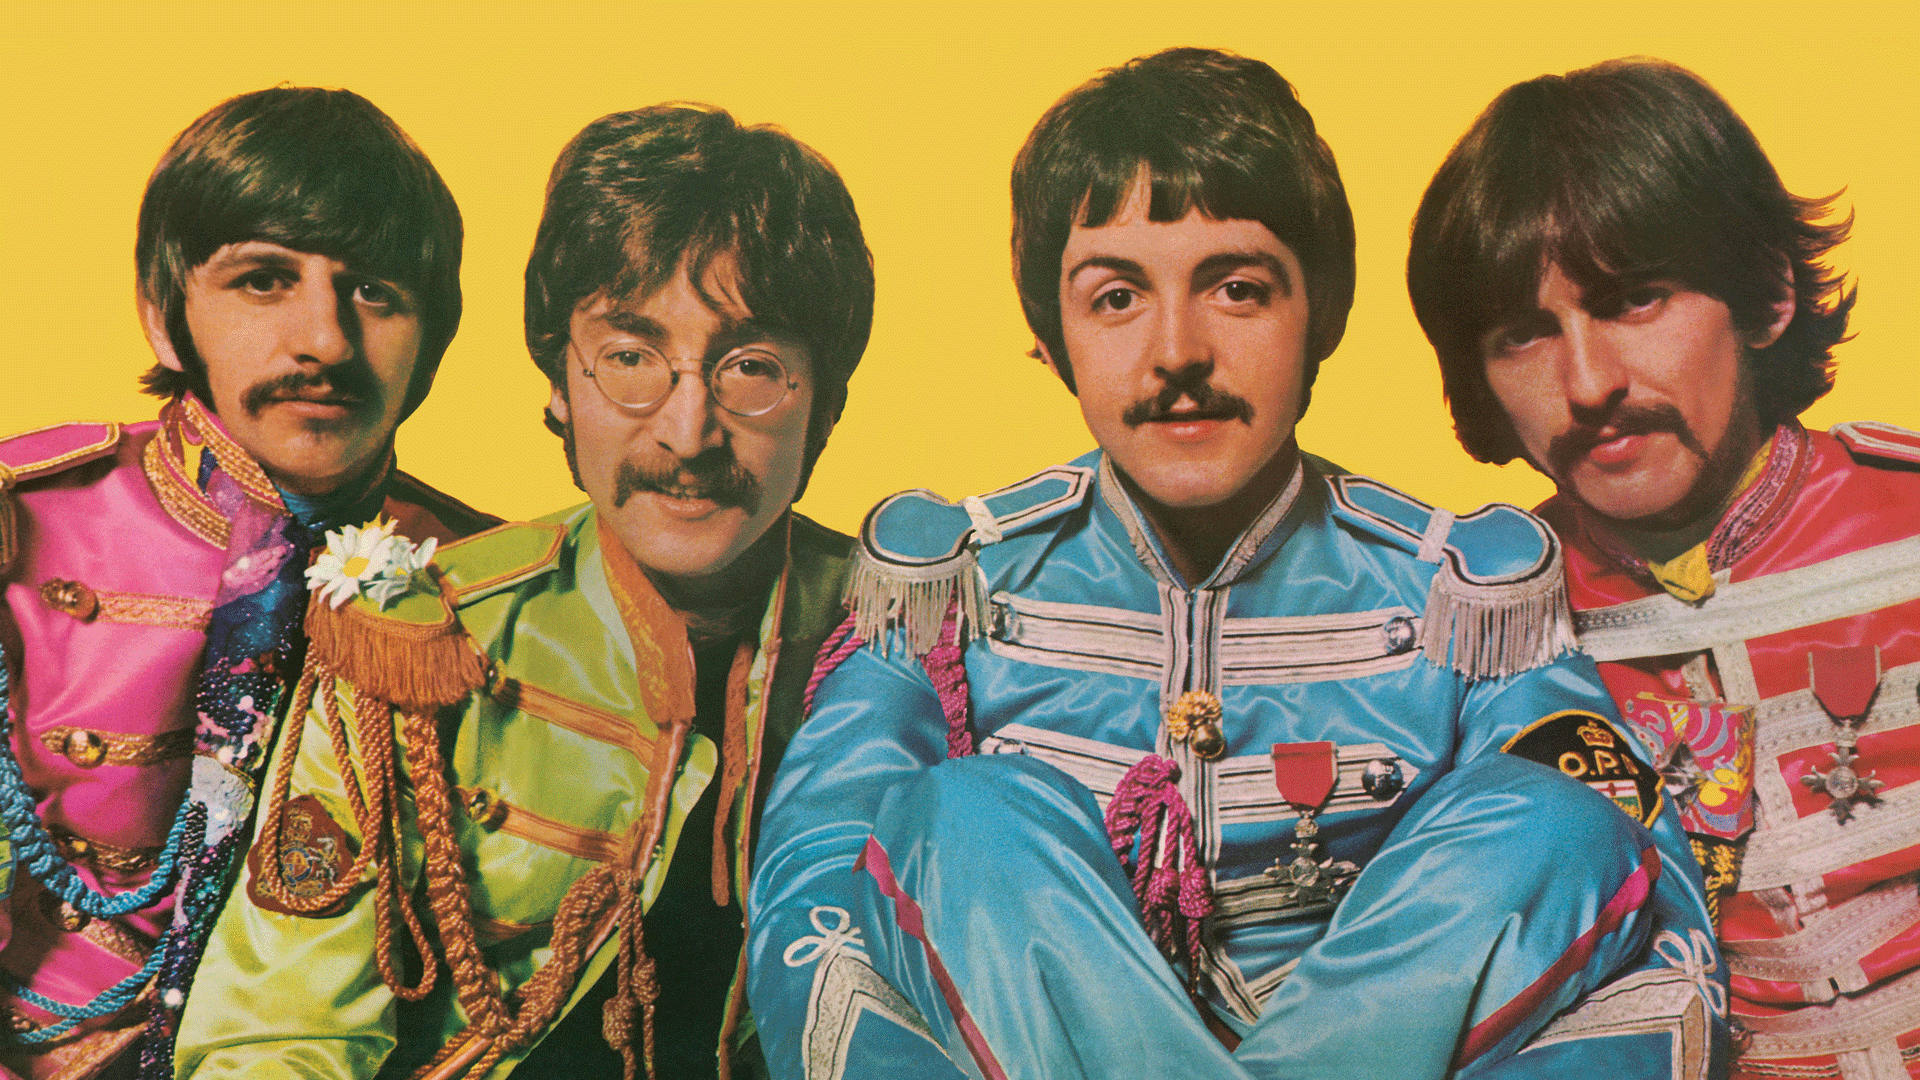 Sgt. Pepper's Musical Revolution. Special!